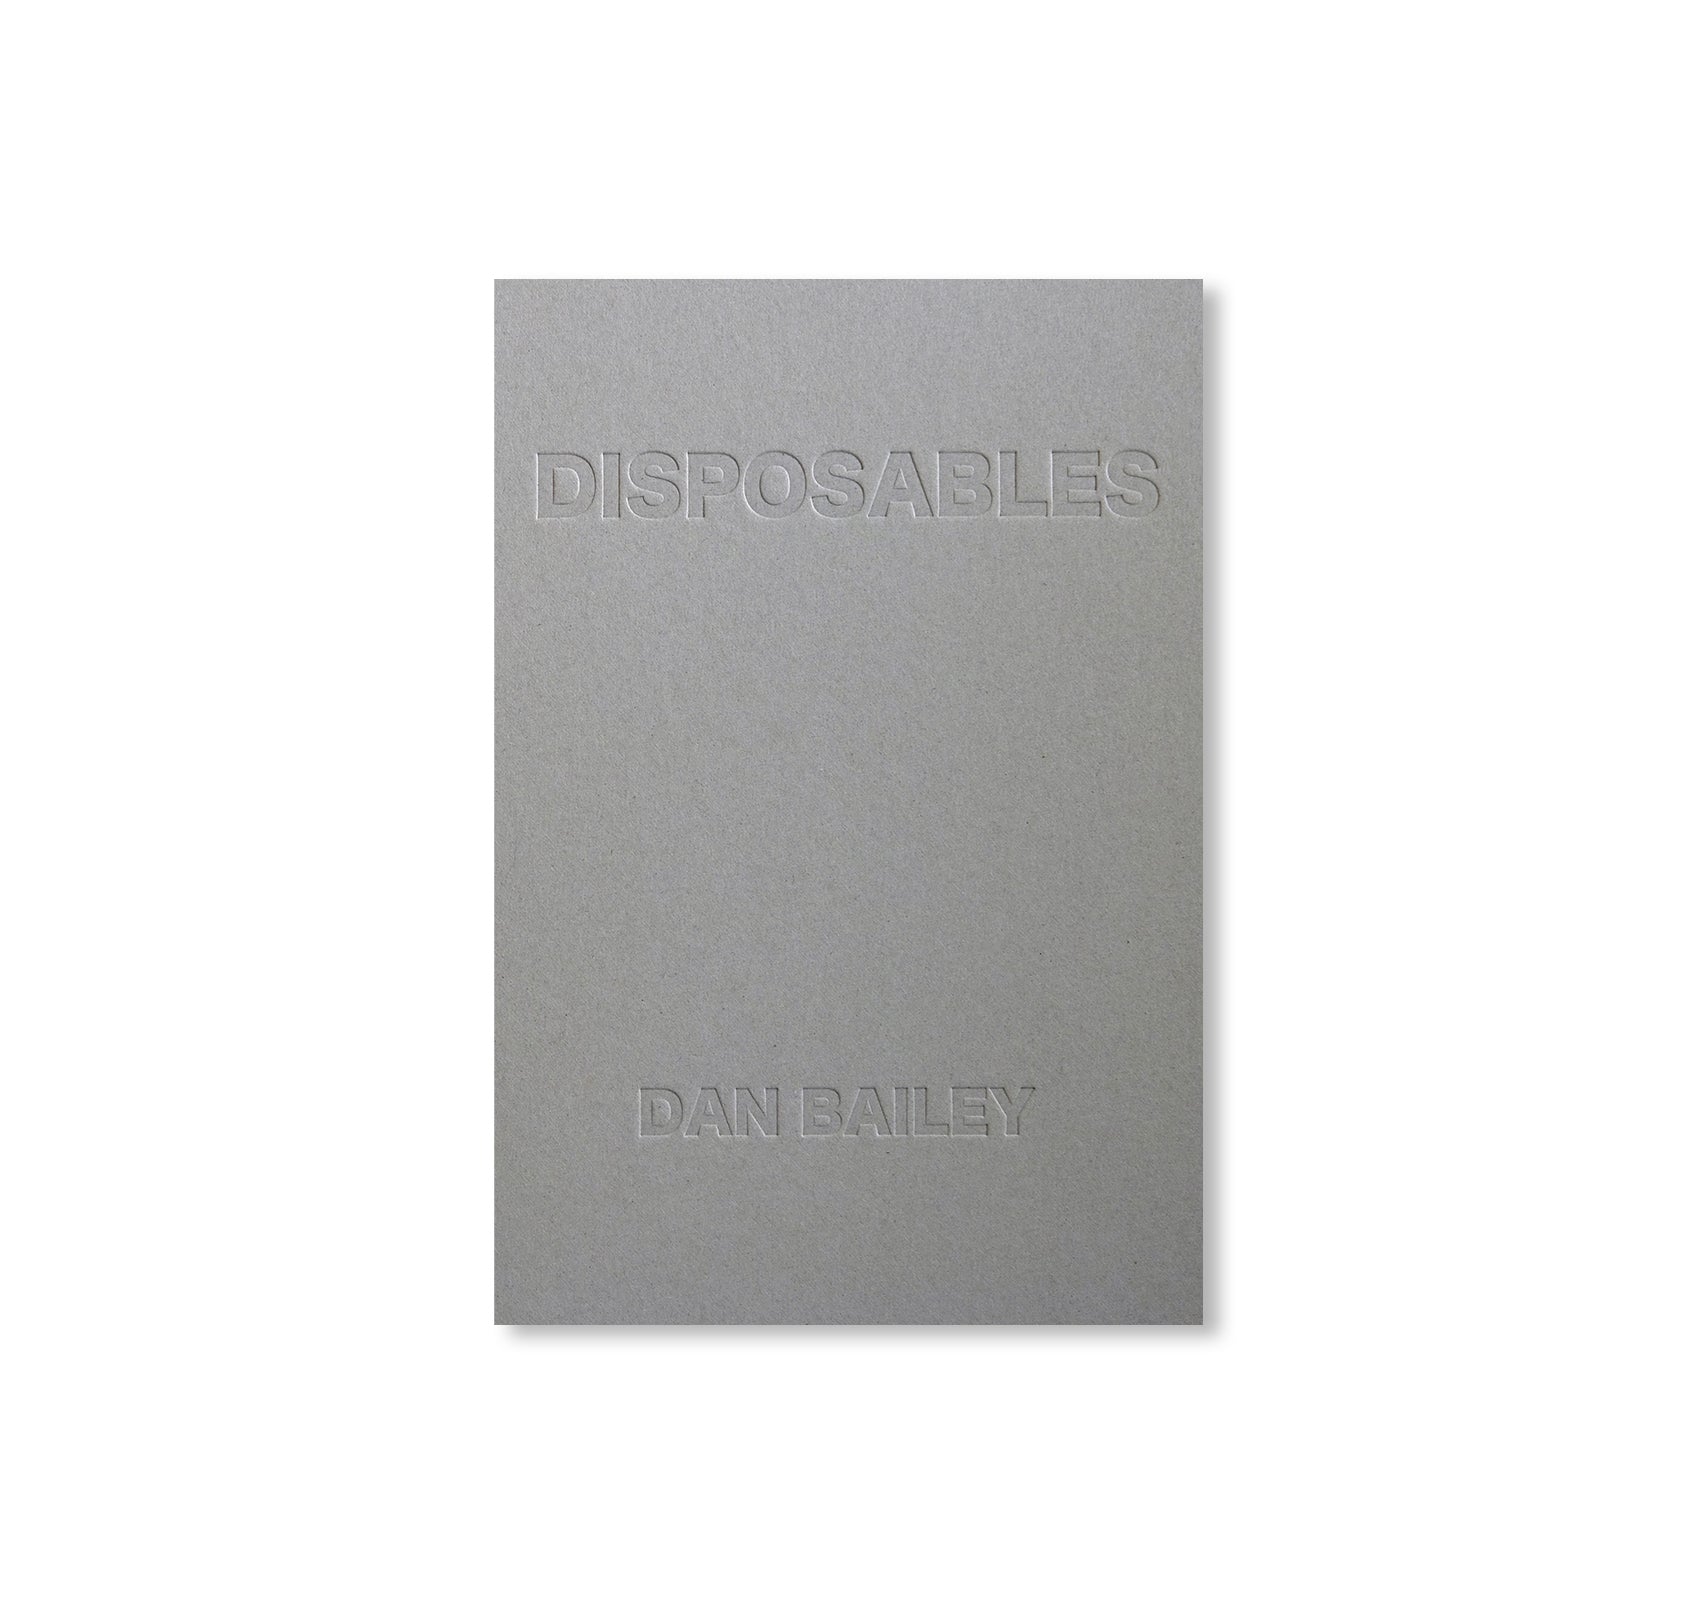 DISPOSABLES by Dan Bailey